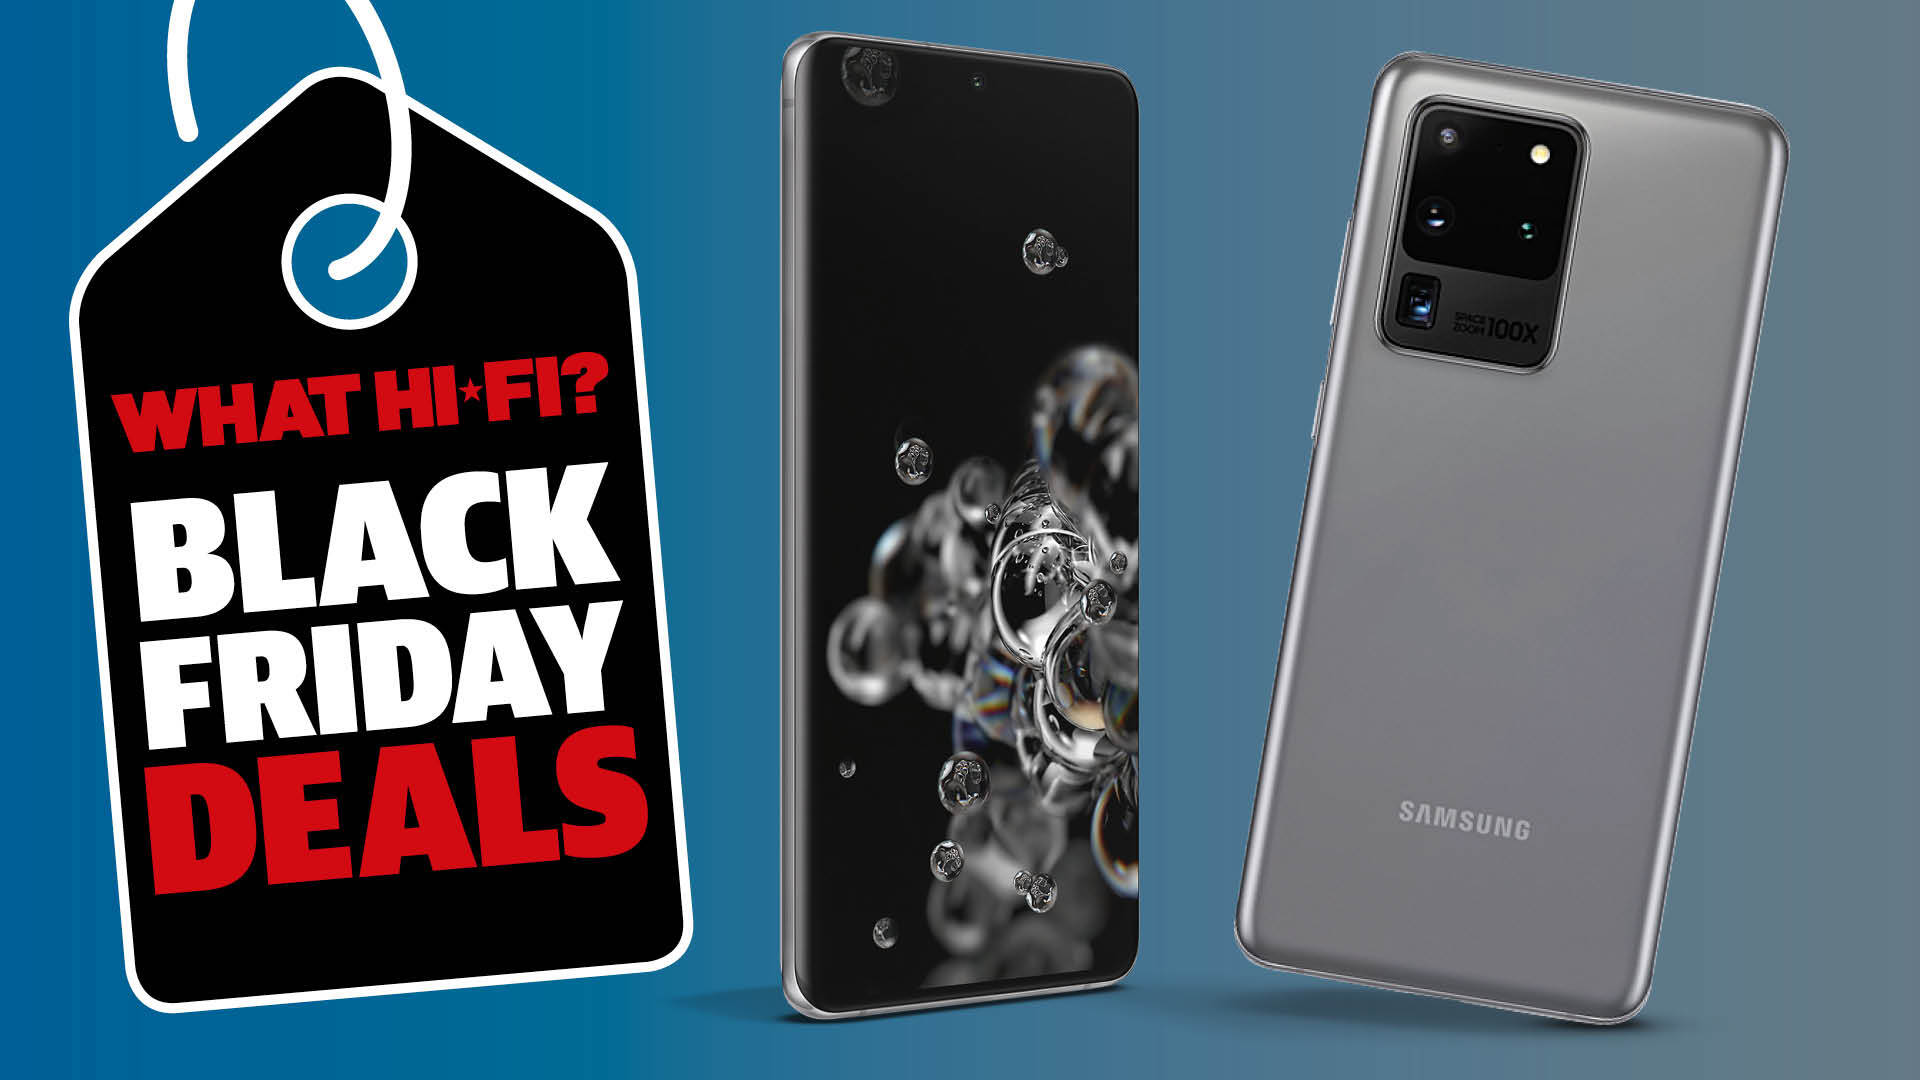 Samsung Black Friday deals save on 4K QLED TVs, Galaxy S20, Galaxy